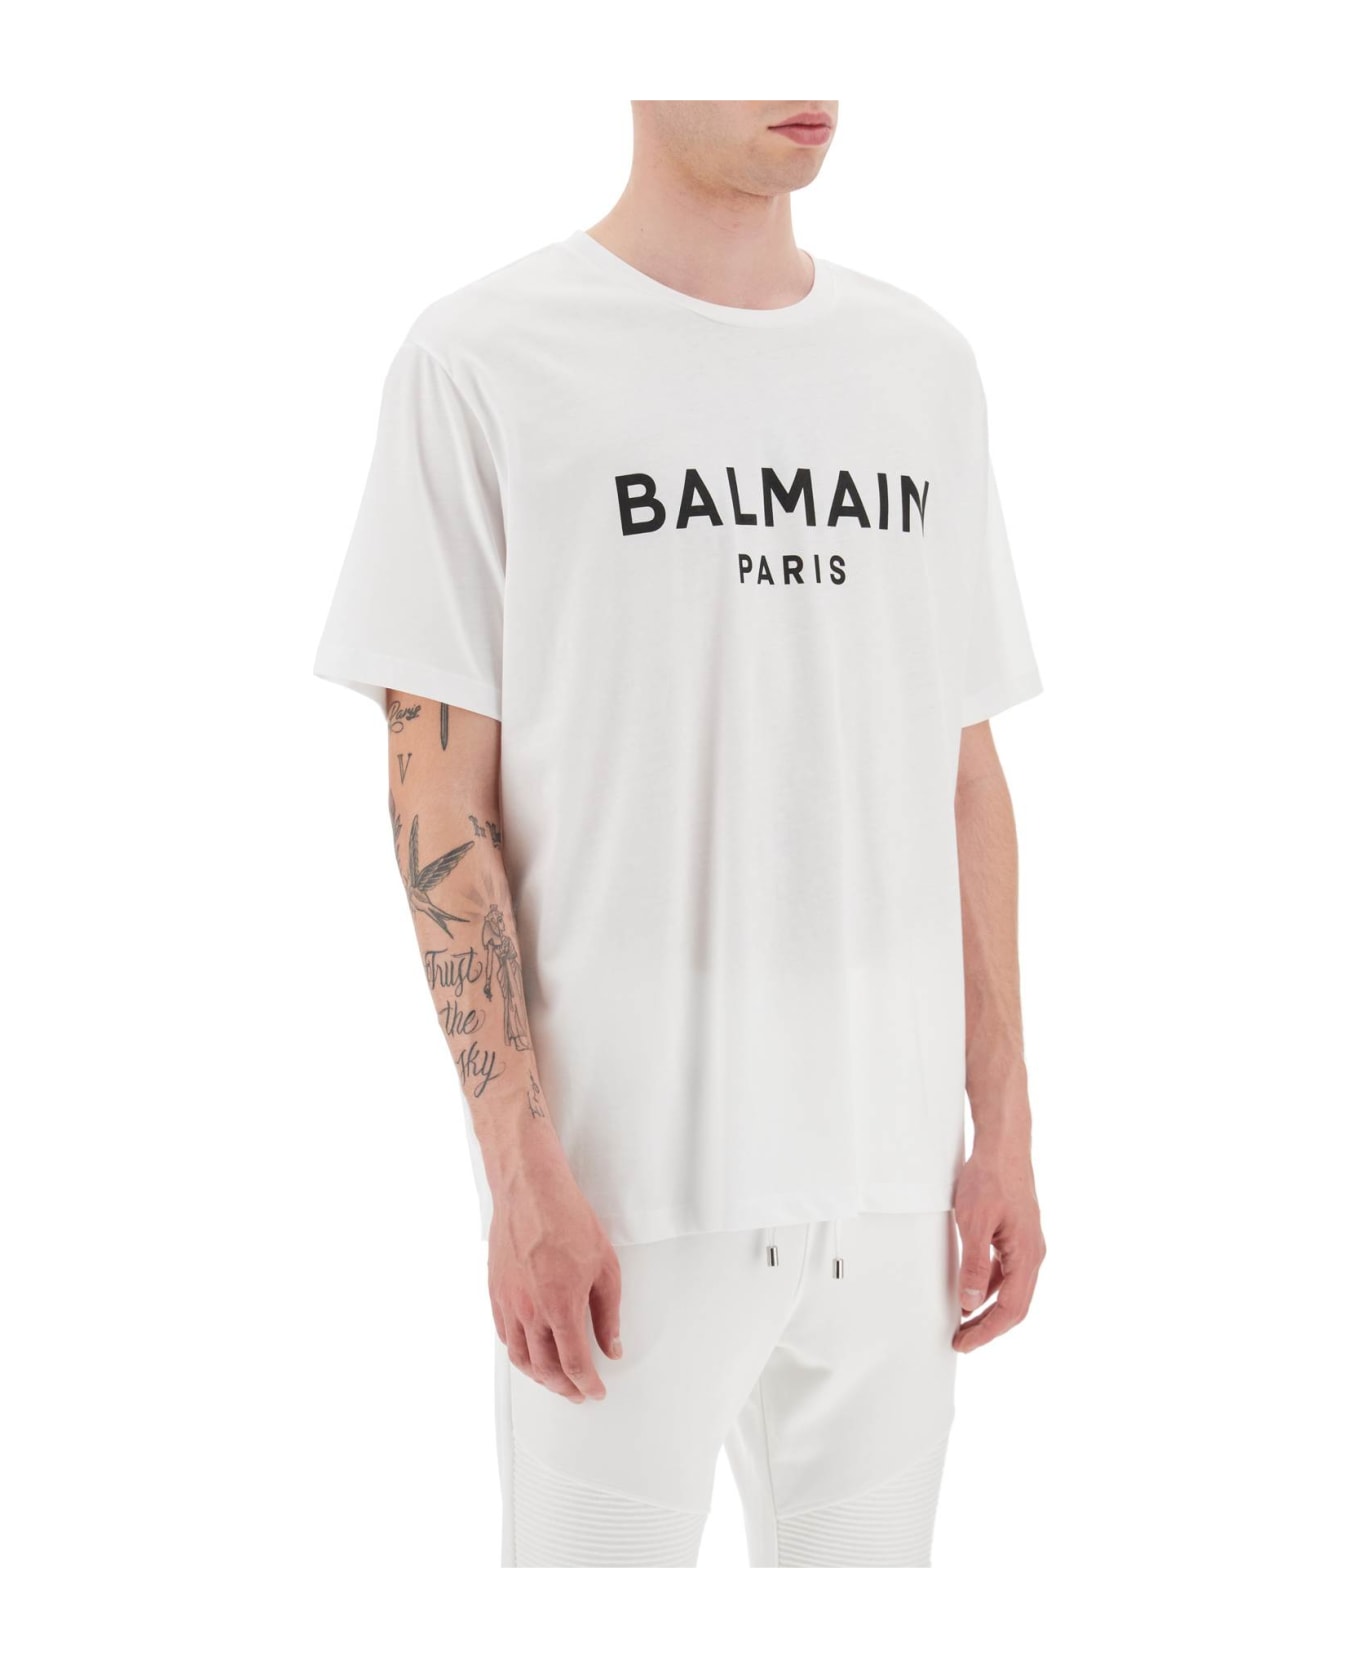 Balmain Logo Print T-shirt - BLANC/NOIR シャツ